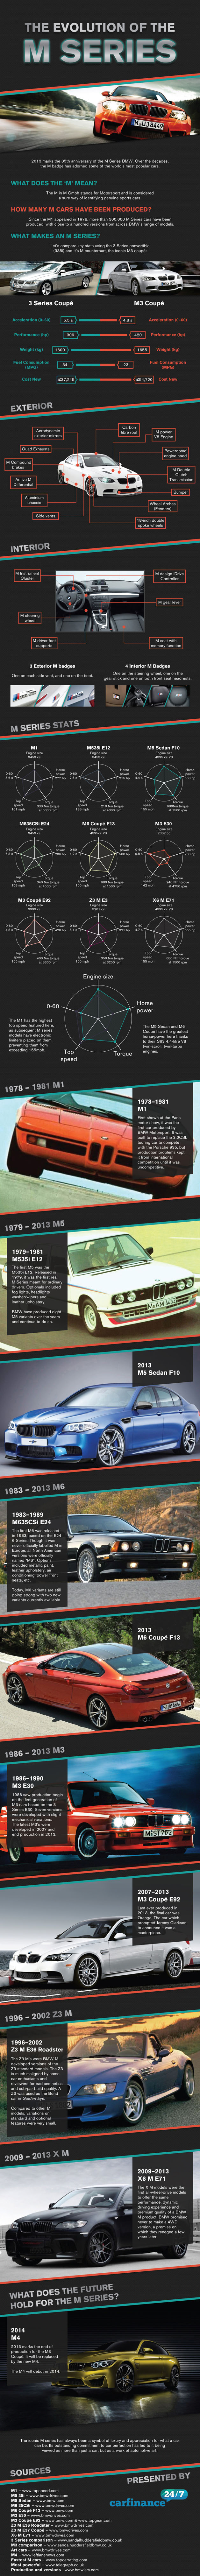 BMW M infographic